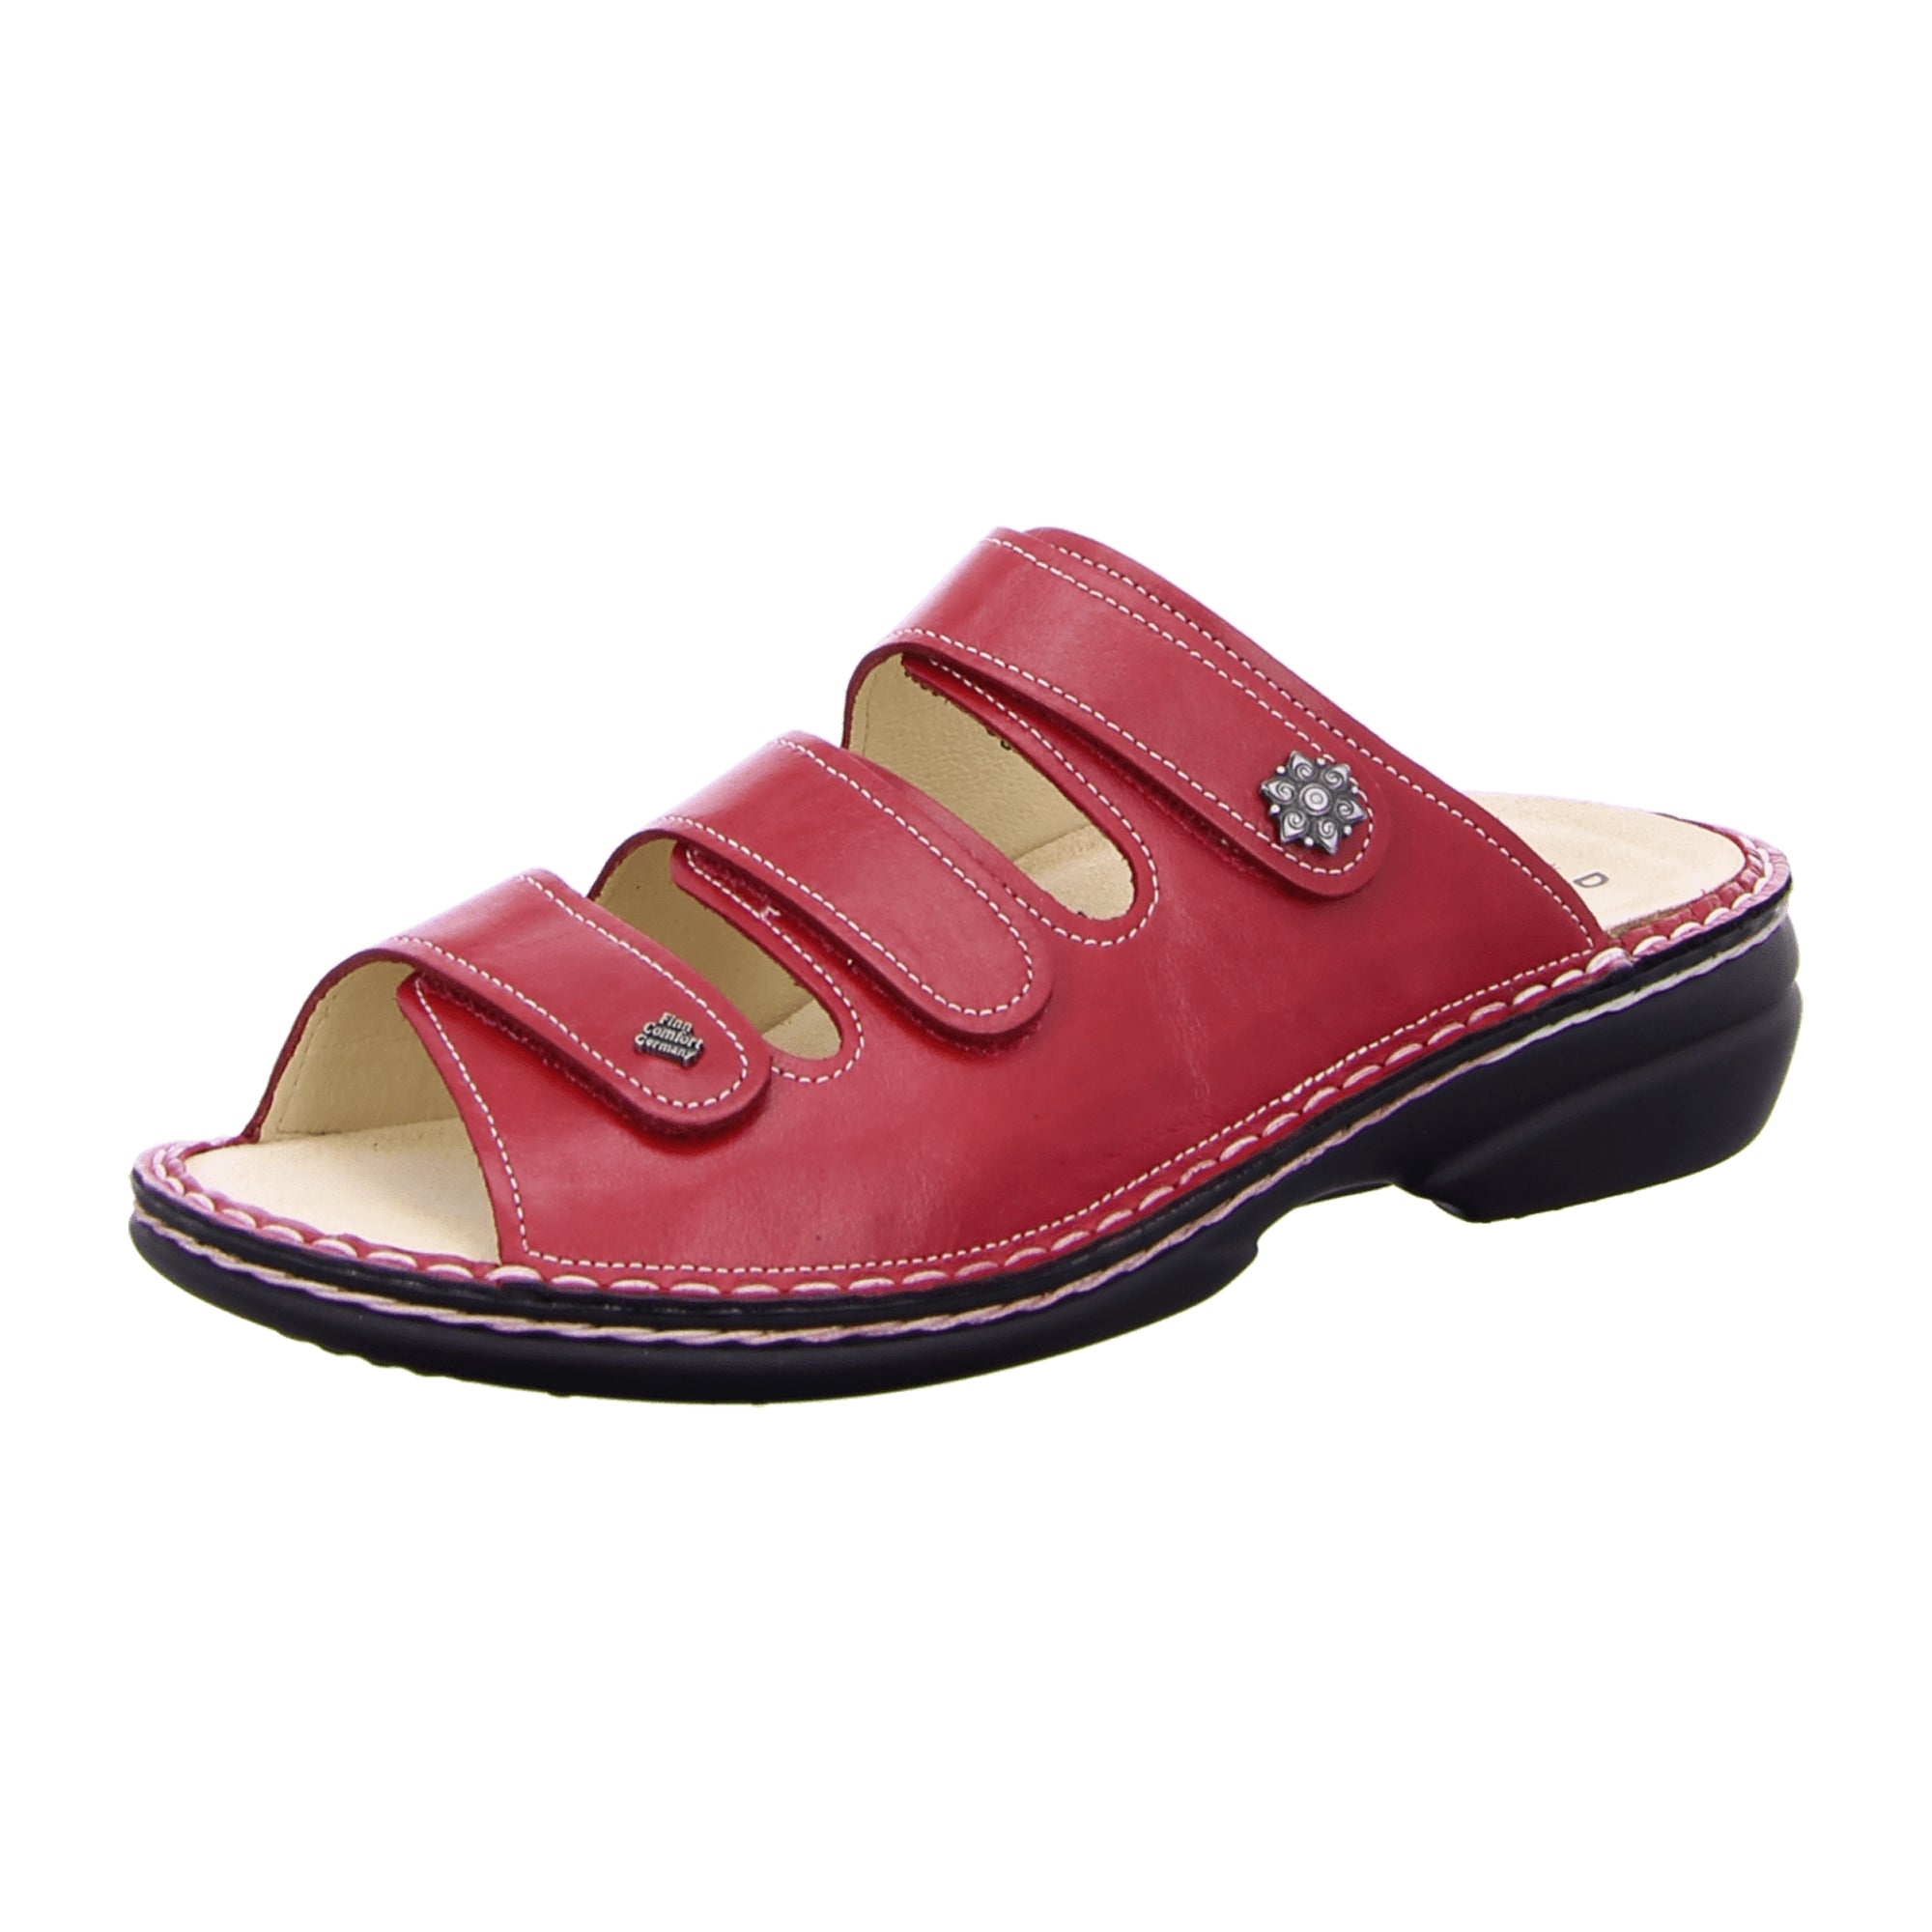 Finn Comfort Menorca S Red Sandals for Women - Stylish & Comfortable